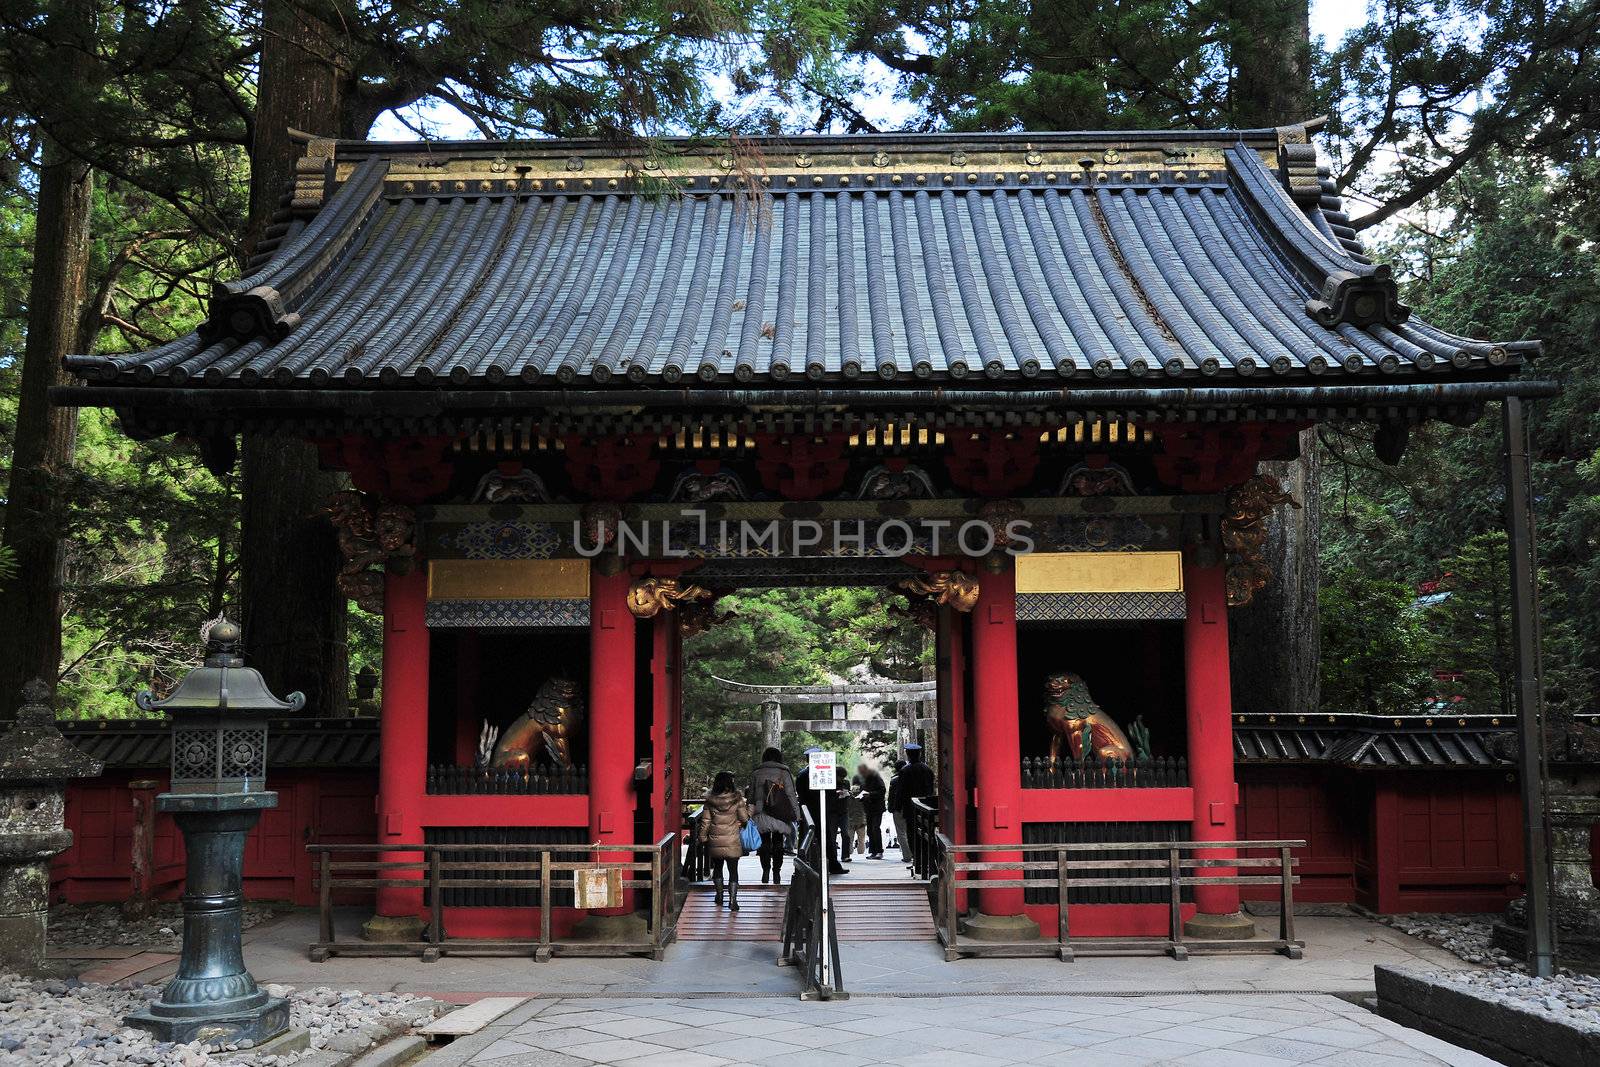 world heritage toshogu shrine red gate entrance